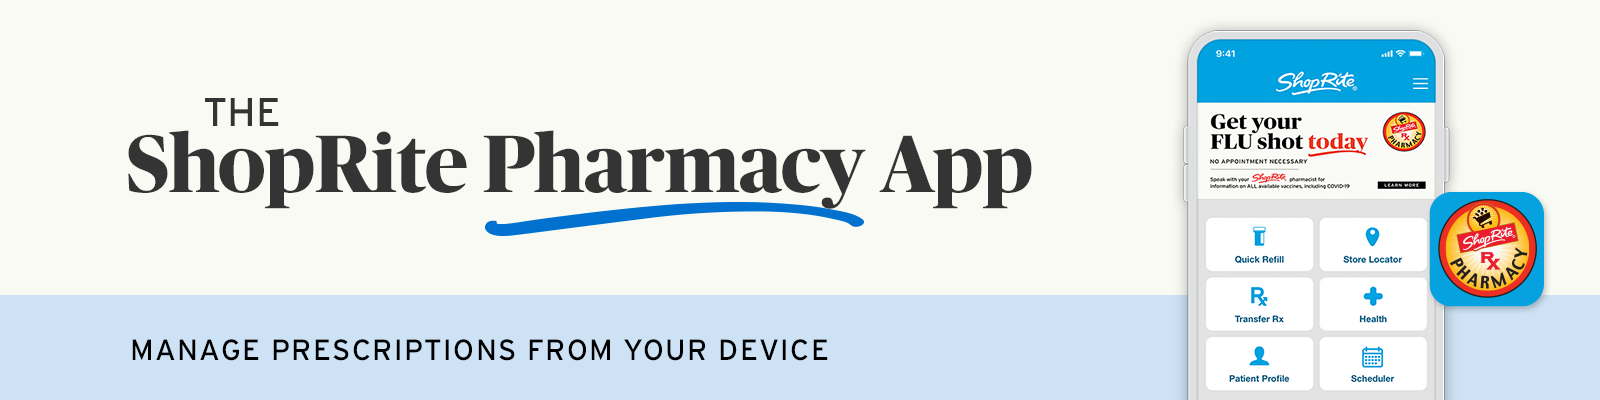 pharmacy app